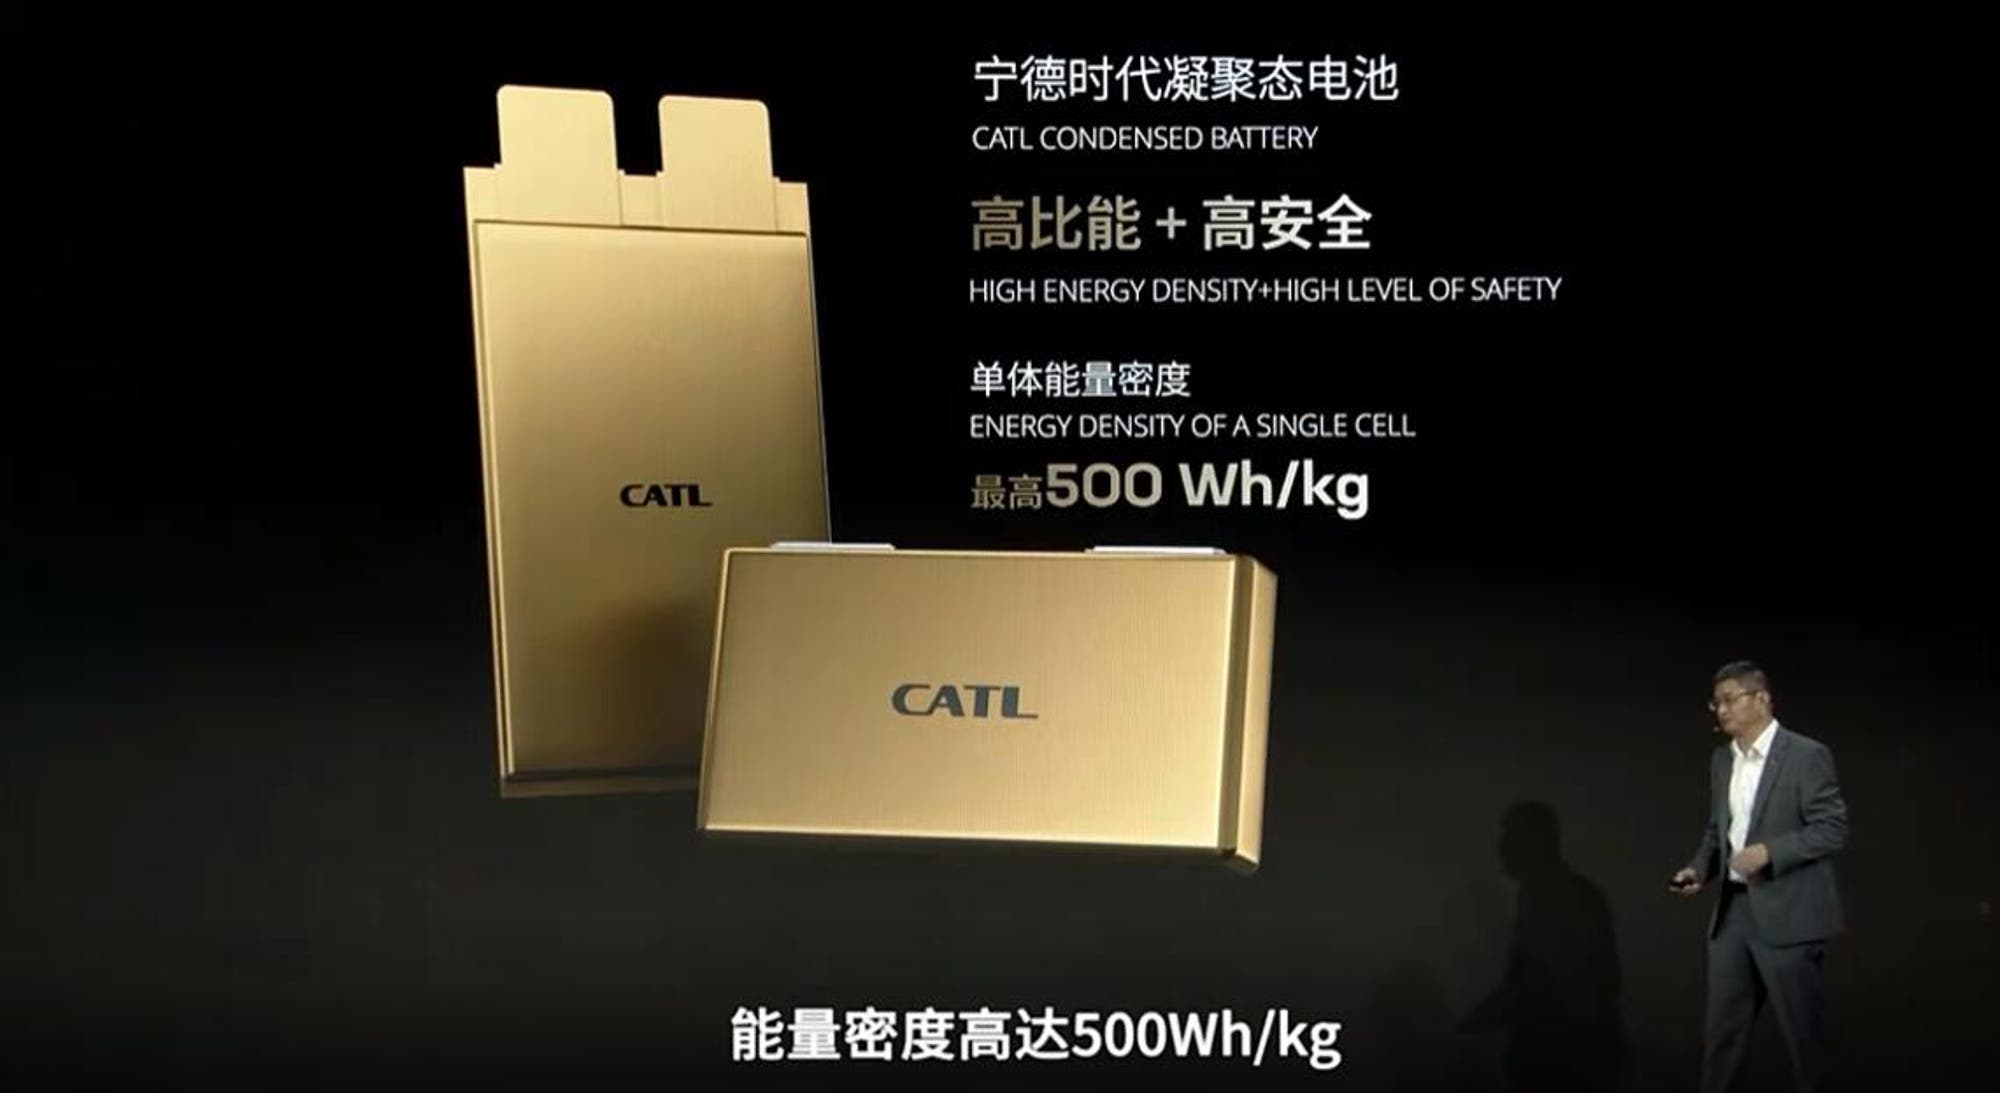 CATL condensed battery